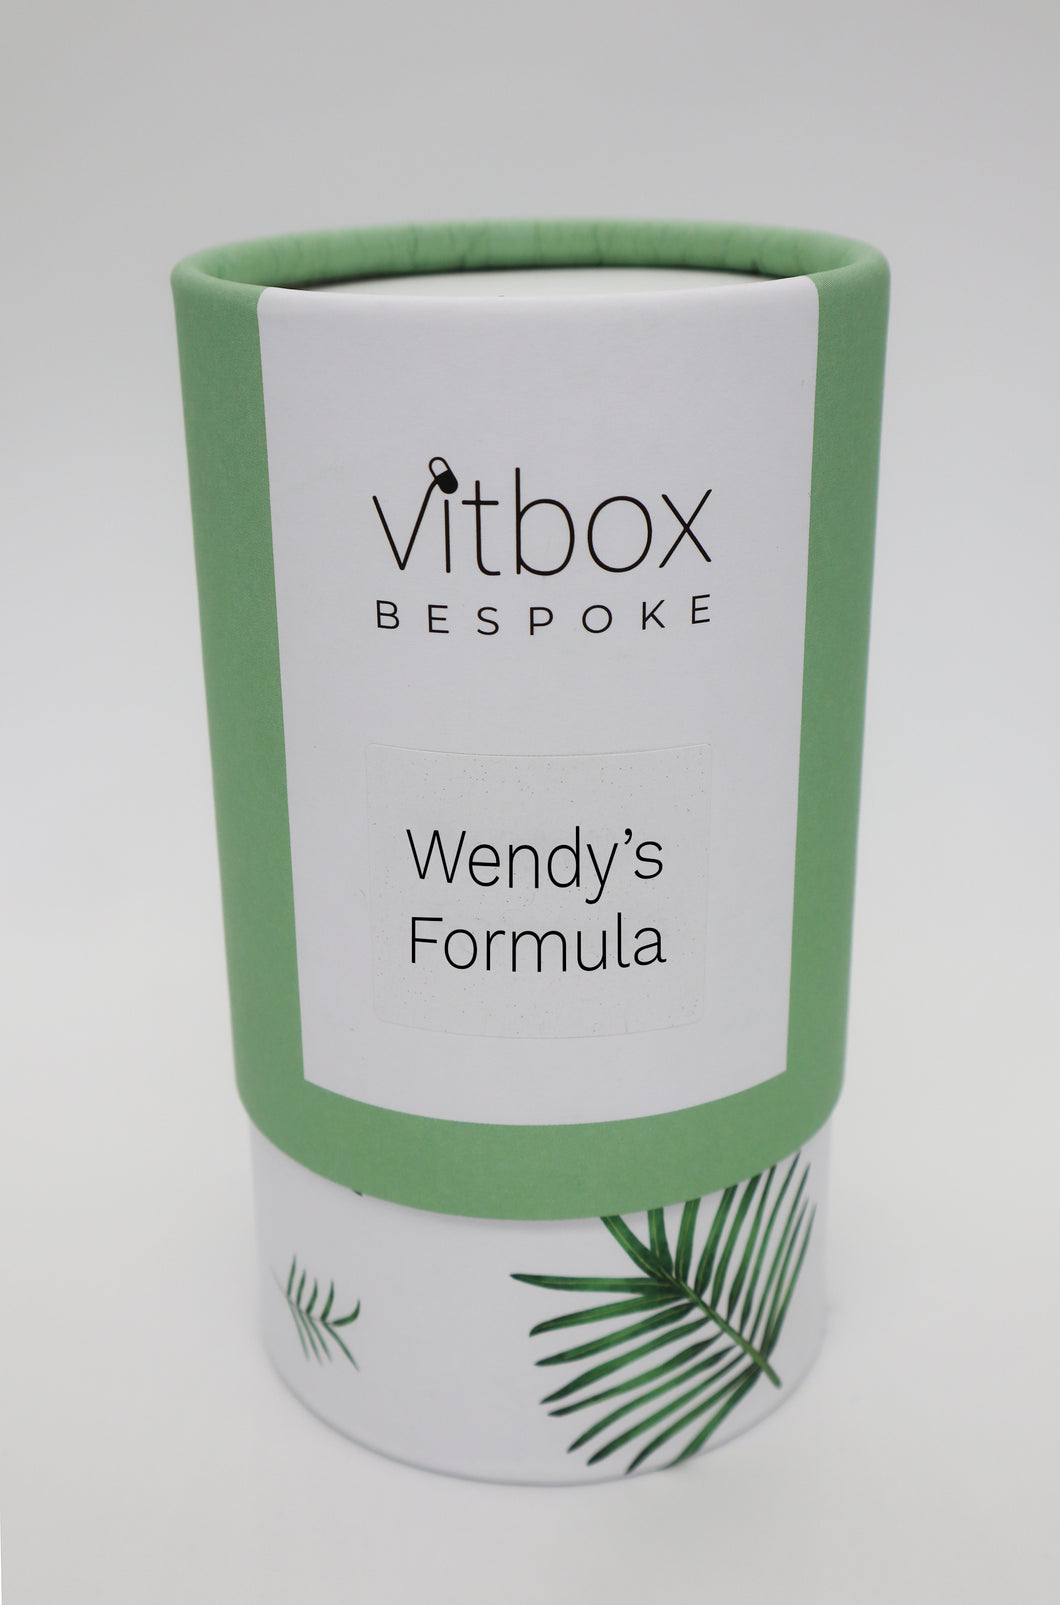 Wendy's Vitbox Bespoke